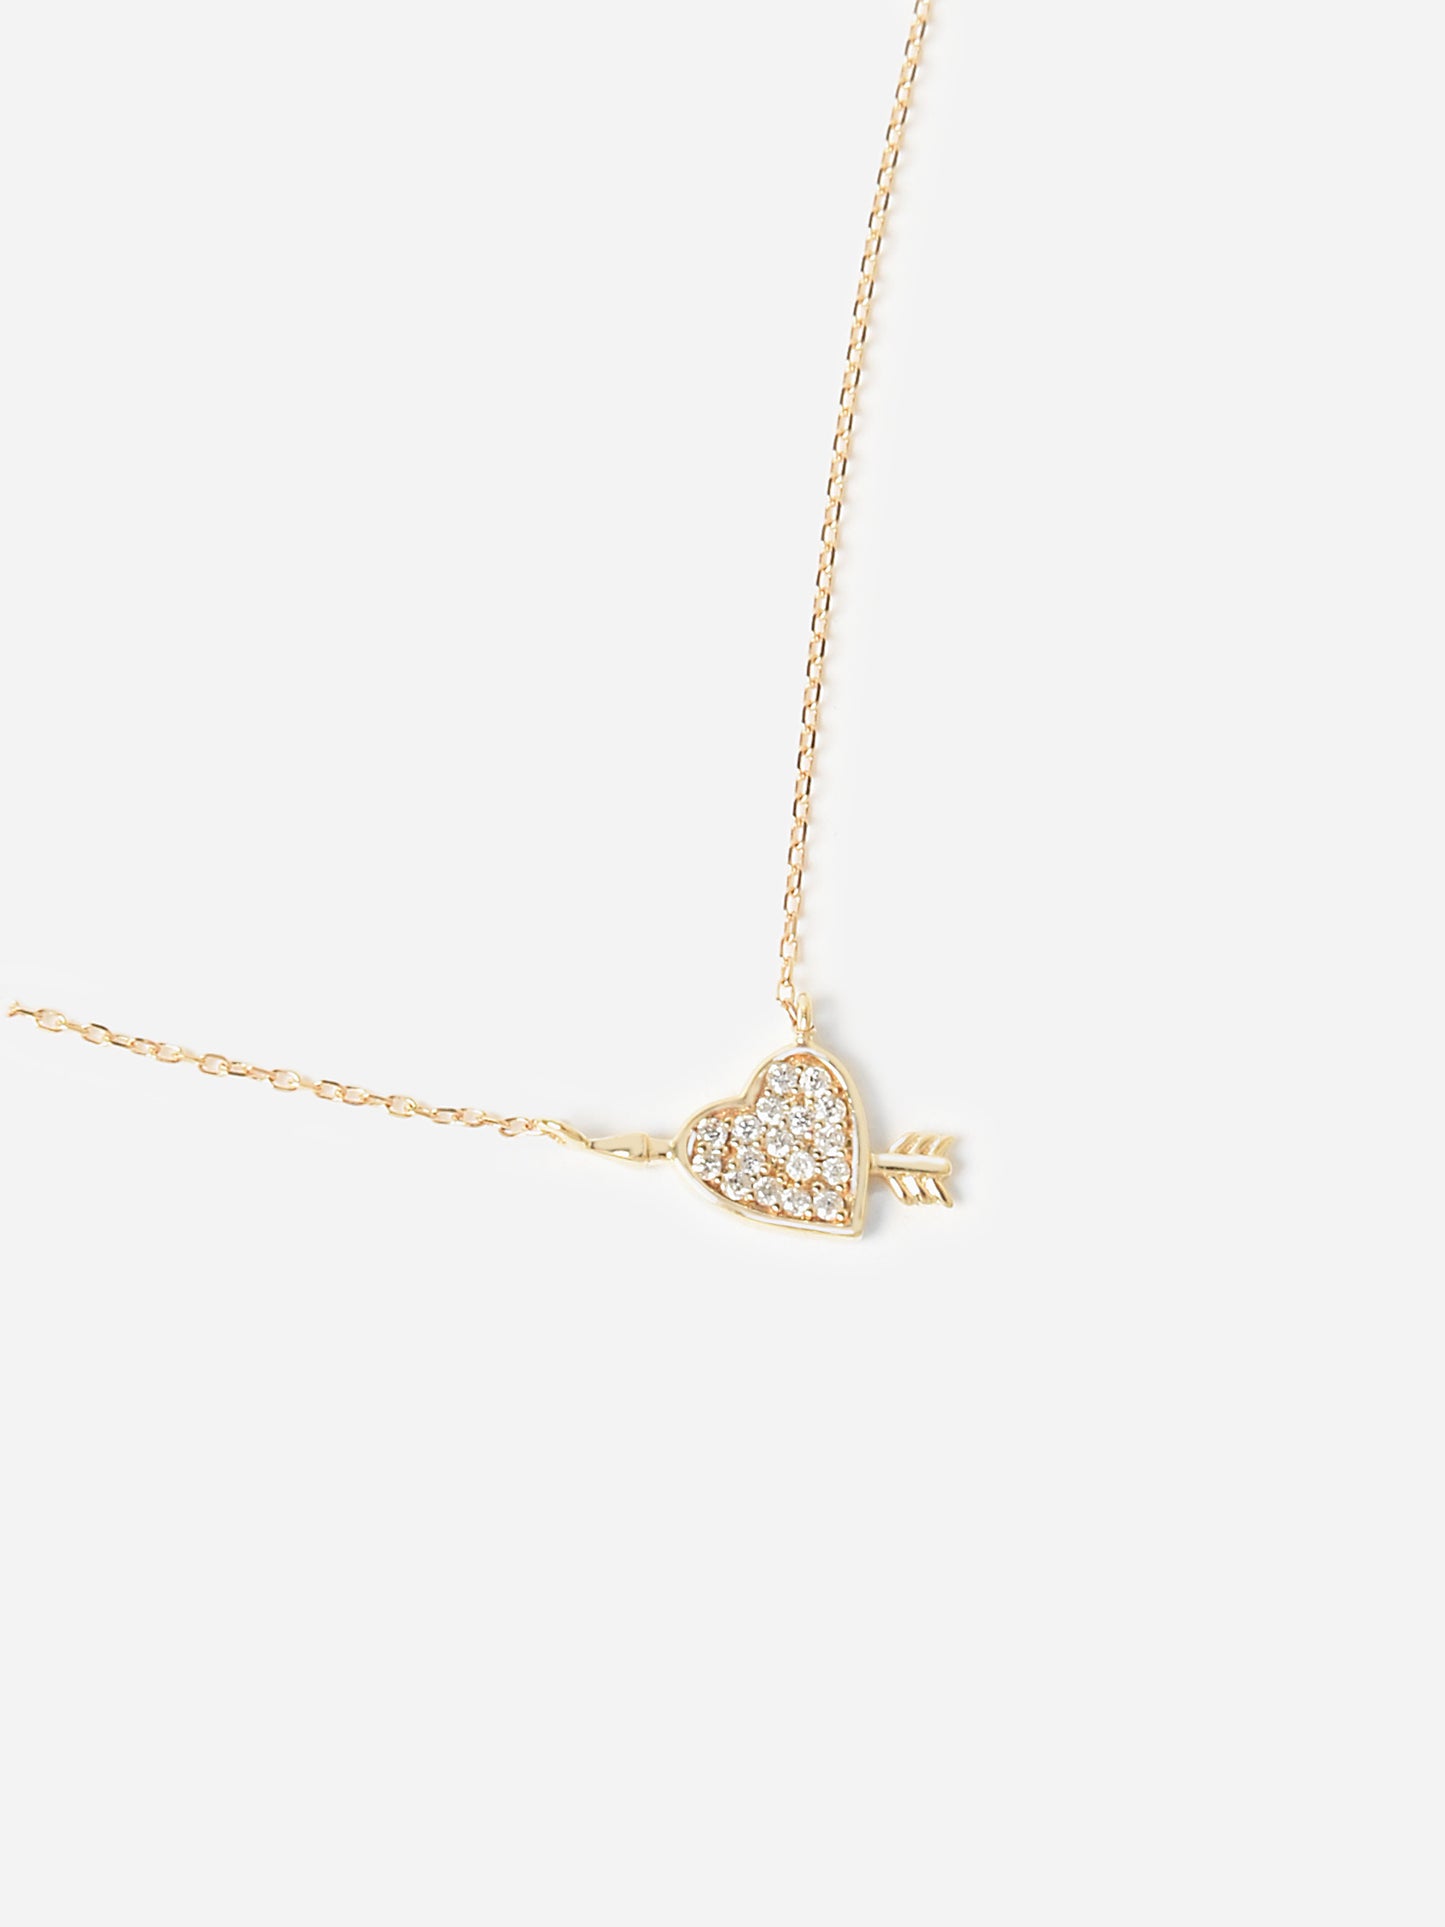 Adina Reyter Women's Tiny Pavé Heart Arrow Necklace